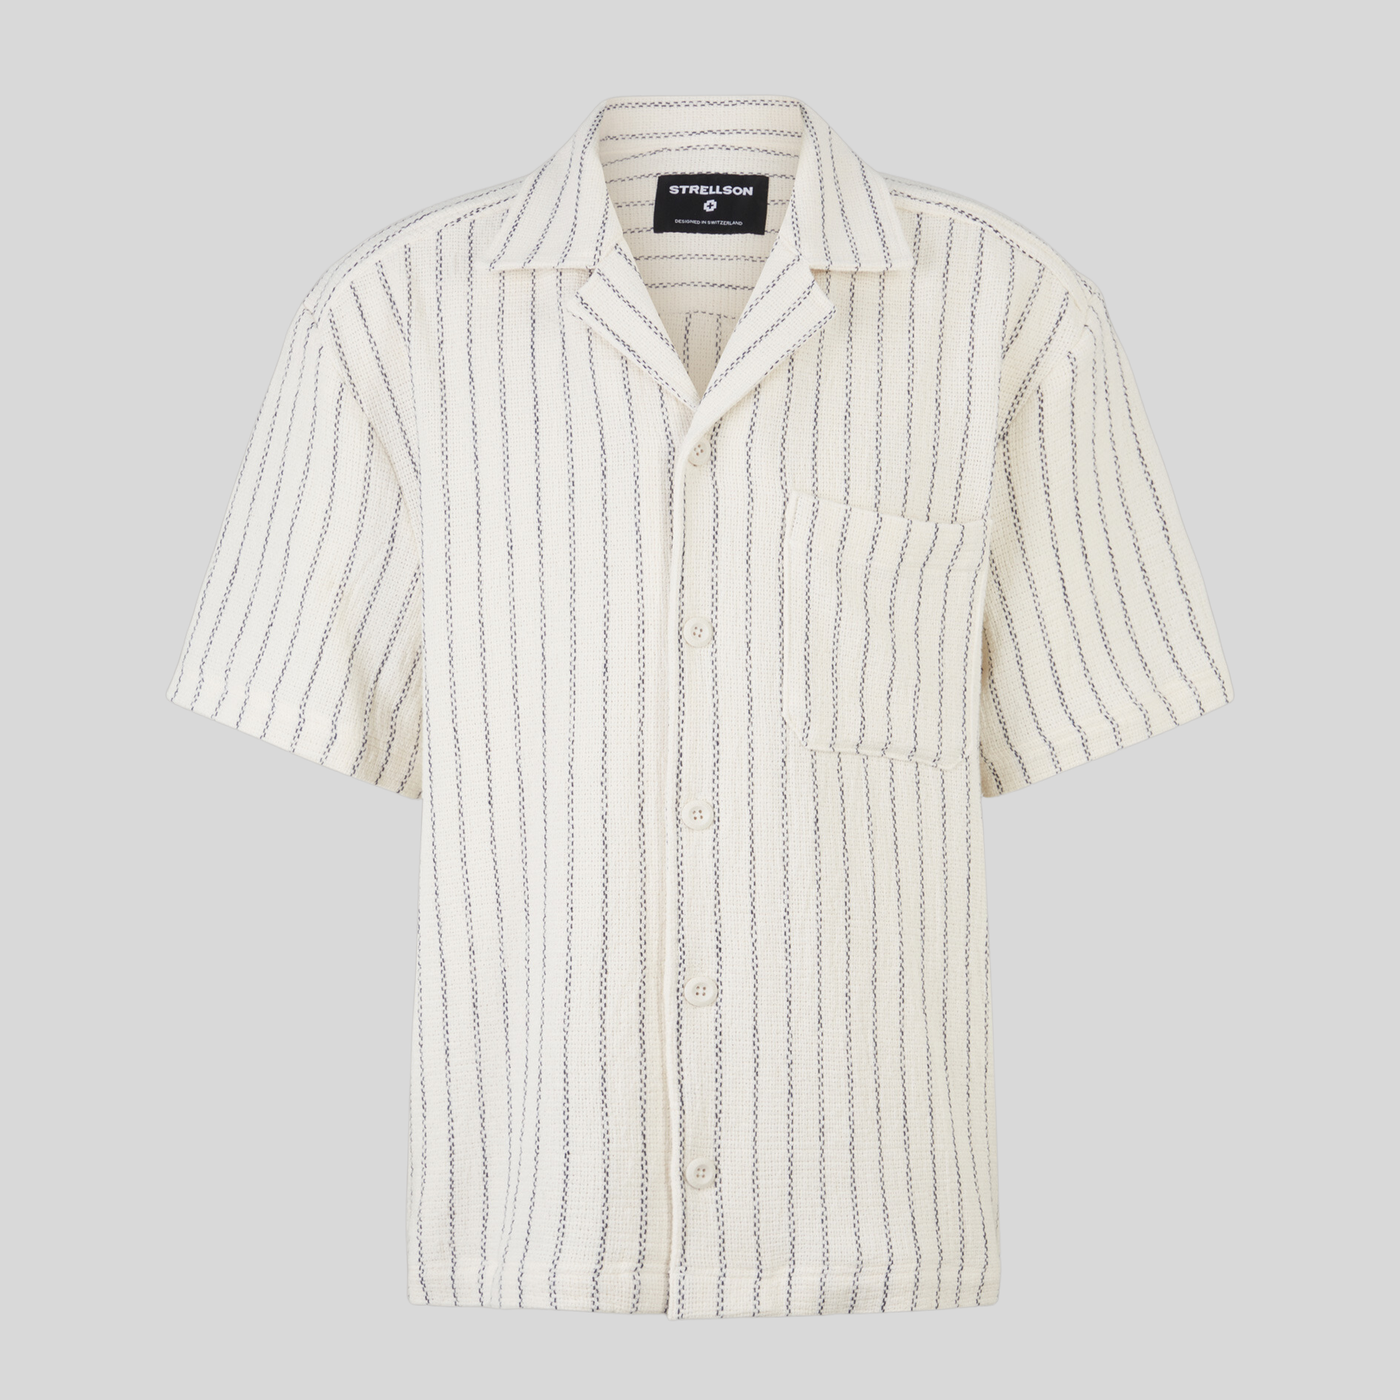 Gotstyle Fashion - Strellson Collar Shirts Textured Stripe Chest Pocket Shirt - Off-White